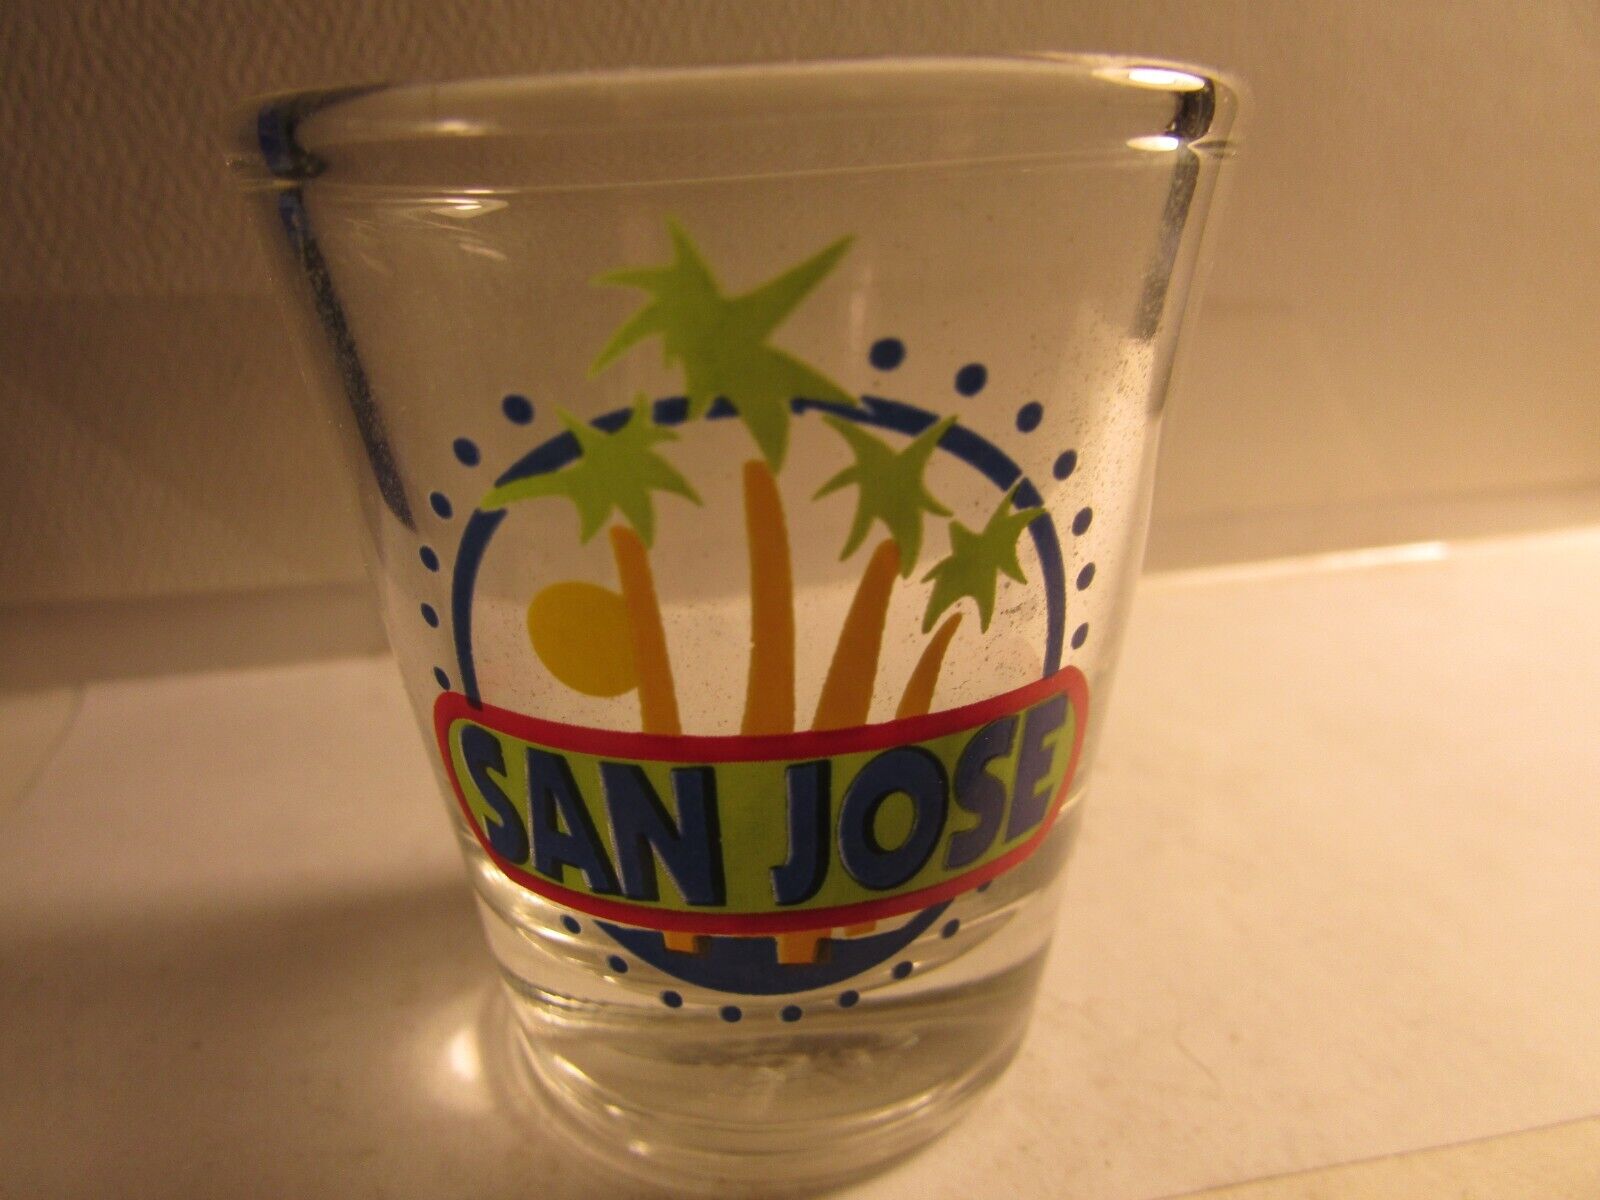 San Jose- palm tree logo on standard Shot Glass-new by Libbey